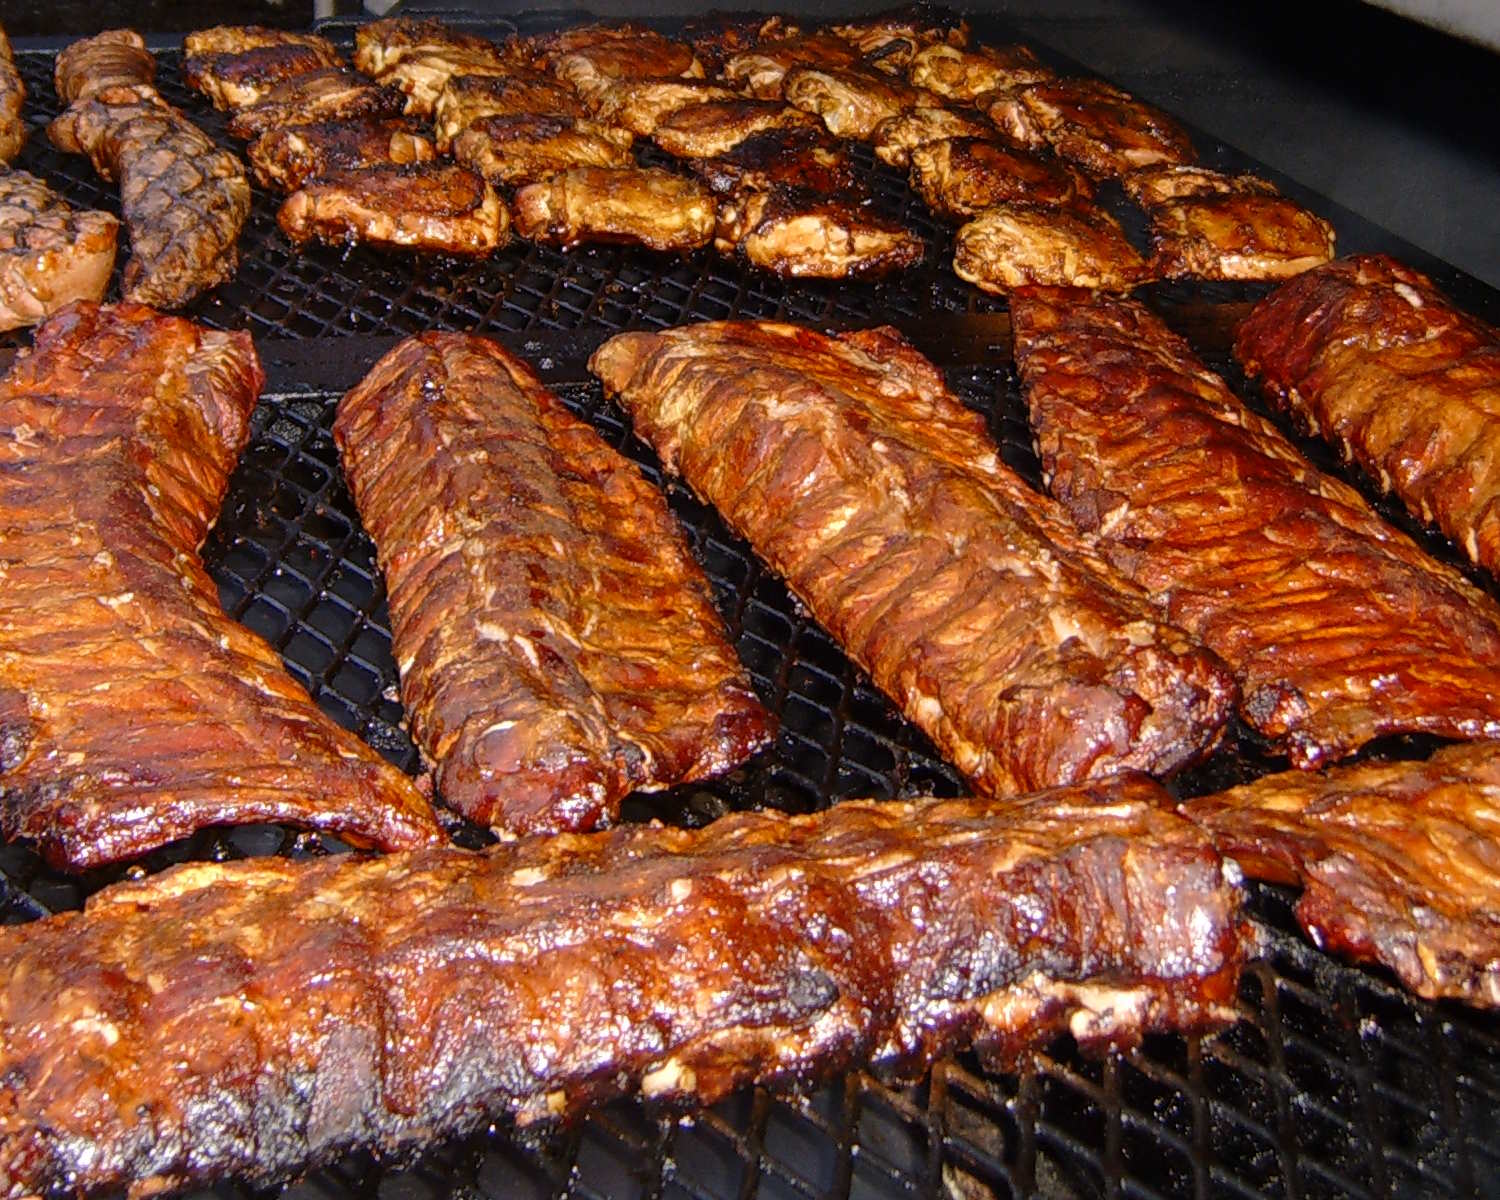 Northwest BBQ Catering - Racks of ribs on the smoker - Seattle Washington